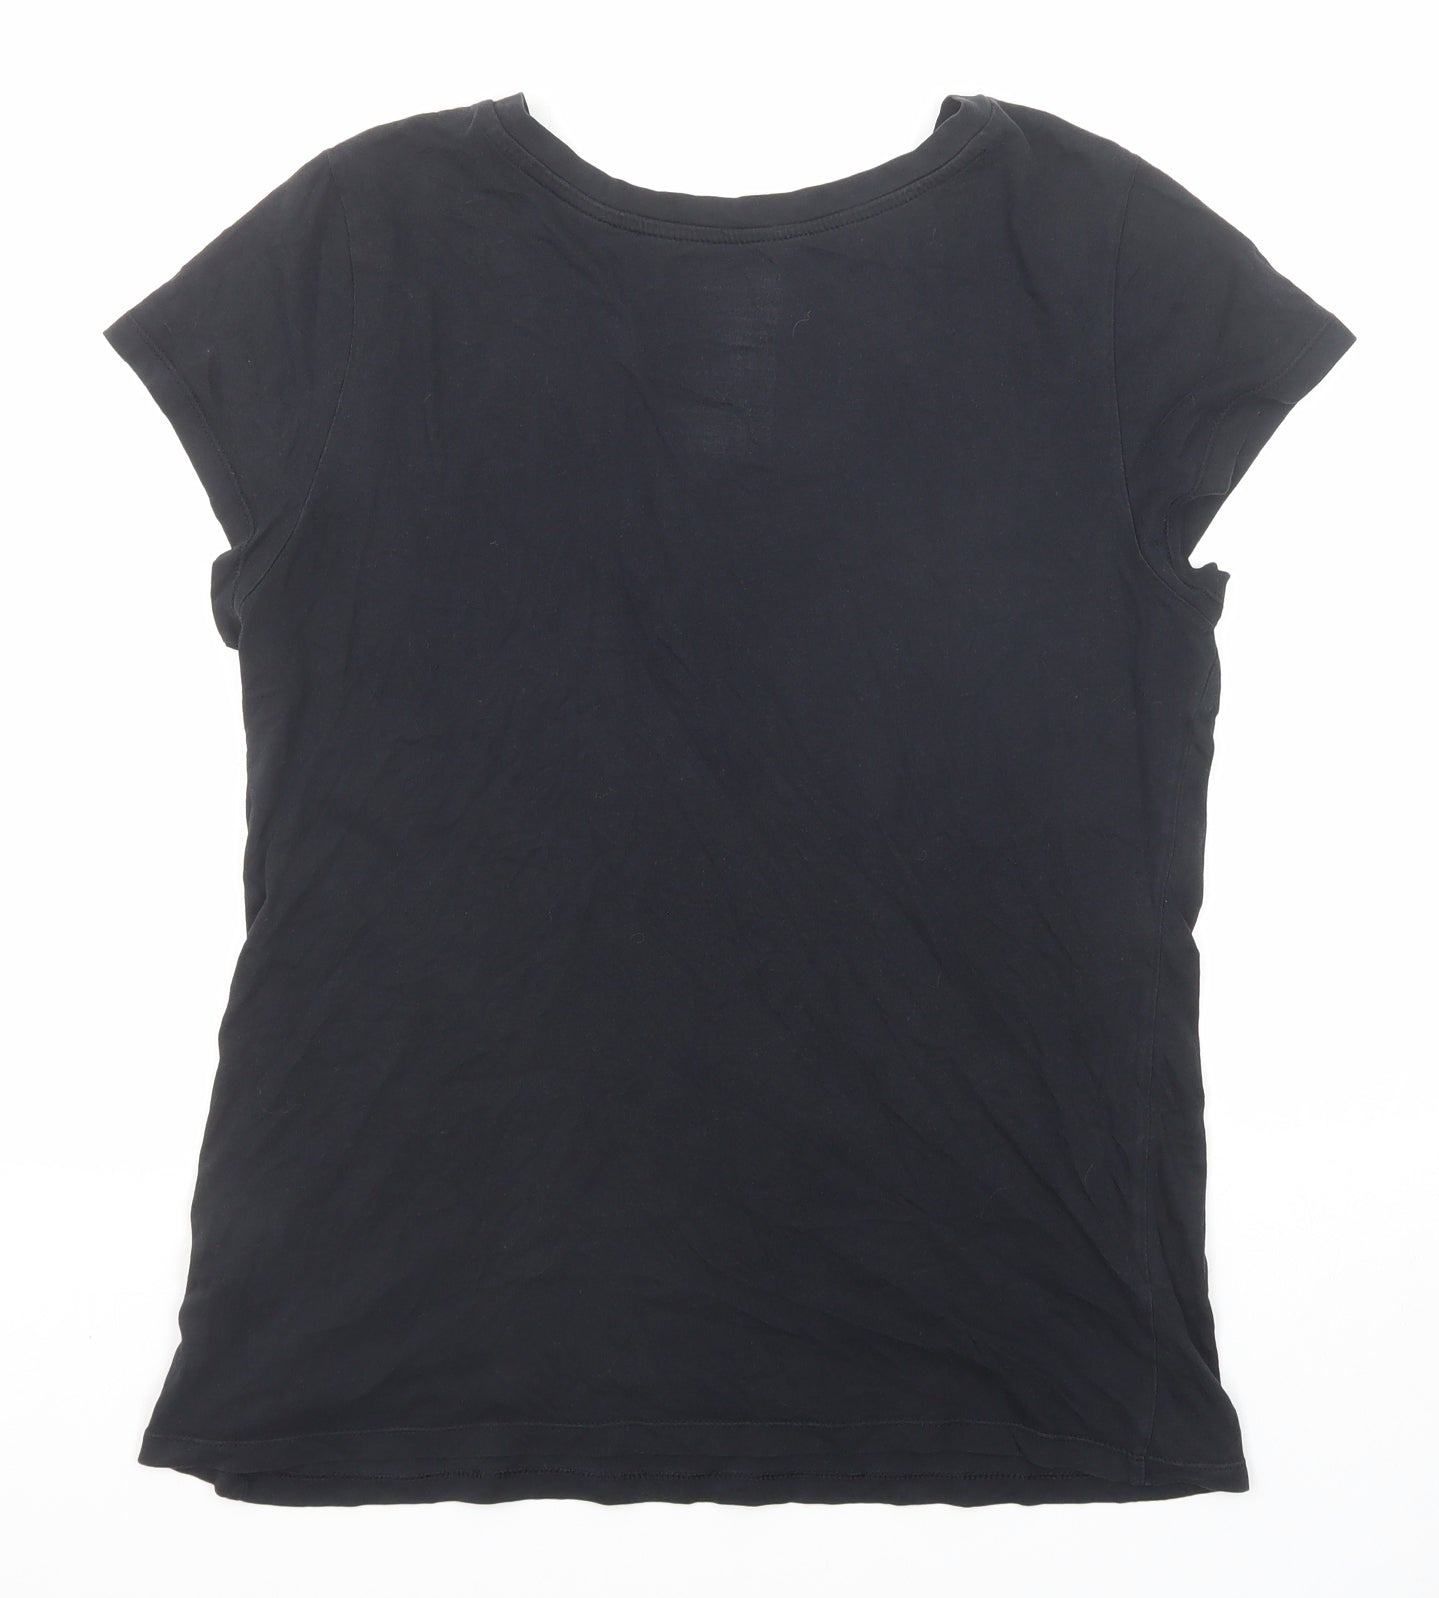 Gap Womens Black Cotton Basic T-Shirt Size M V-Neck